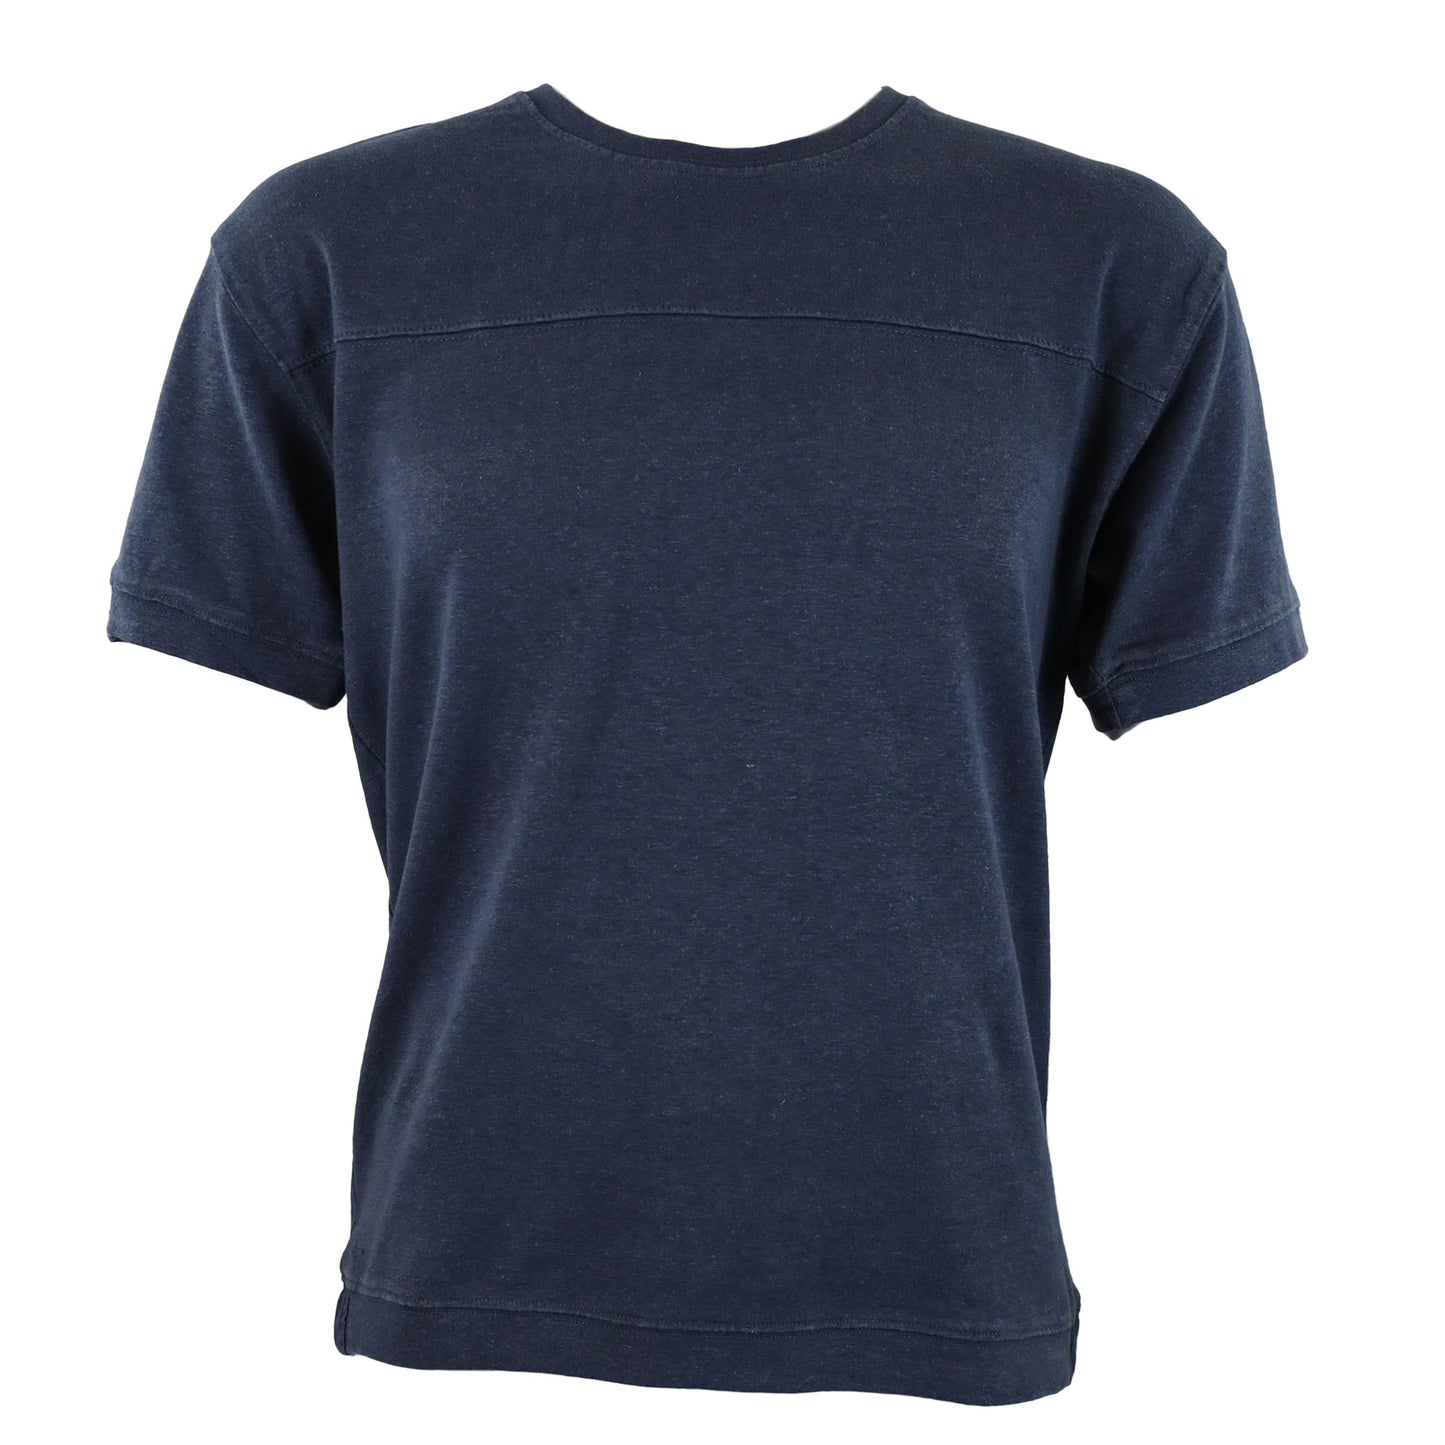 Premium Generational Hemp Shirt- Short Sleeve